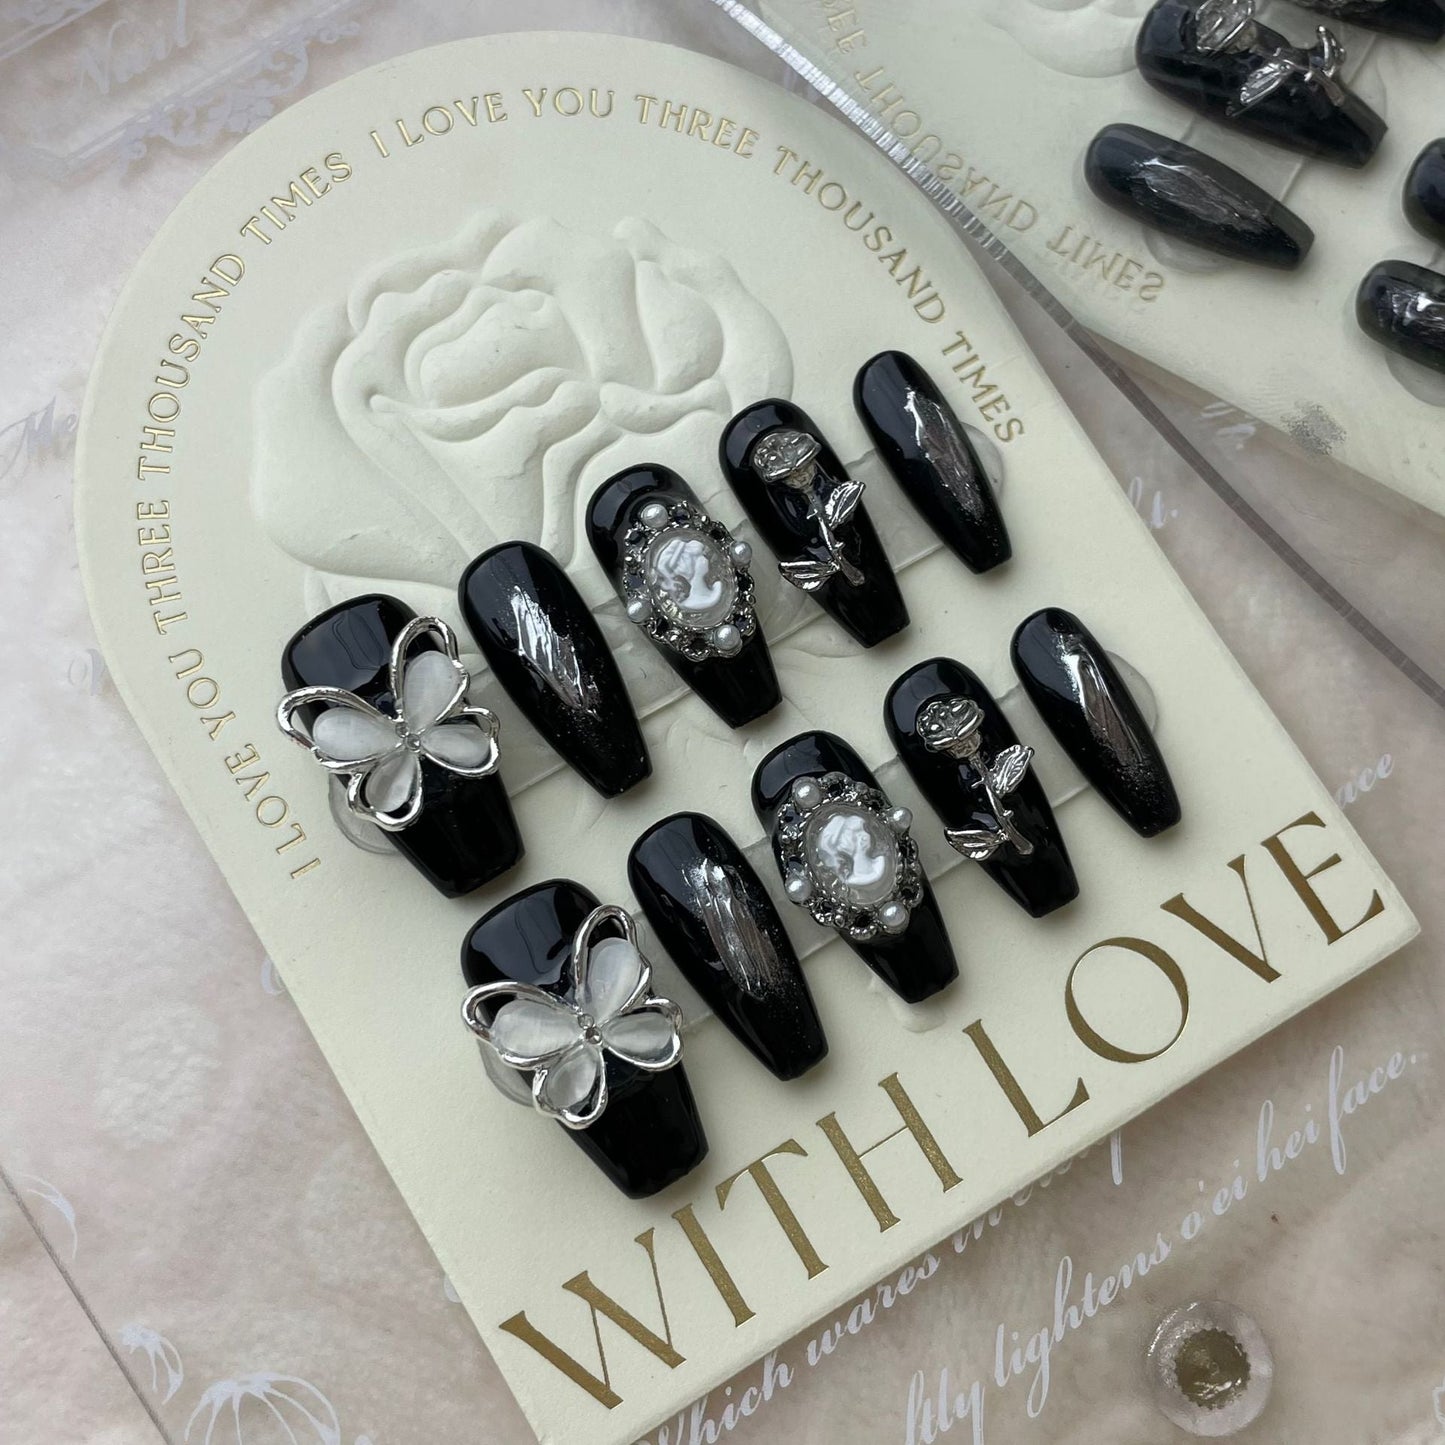 605/606 Butterfly press on nails 100% handmade false nails black sliver